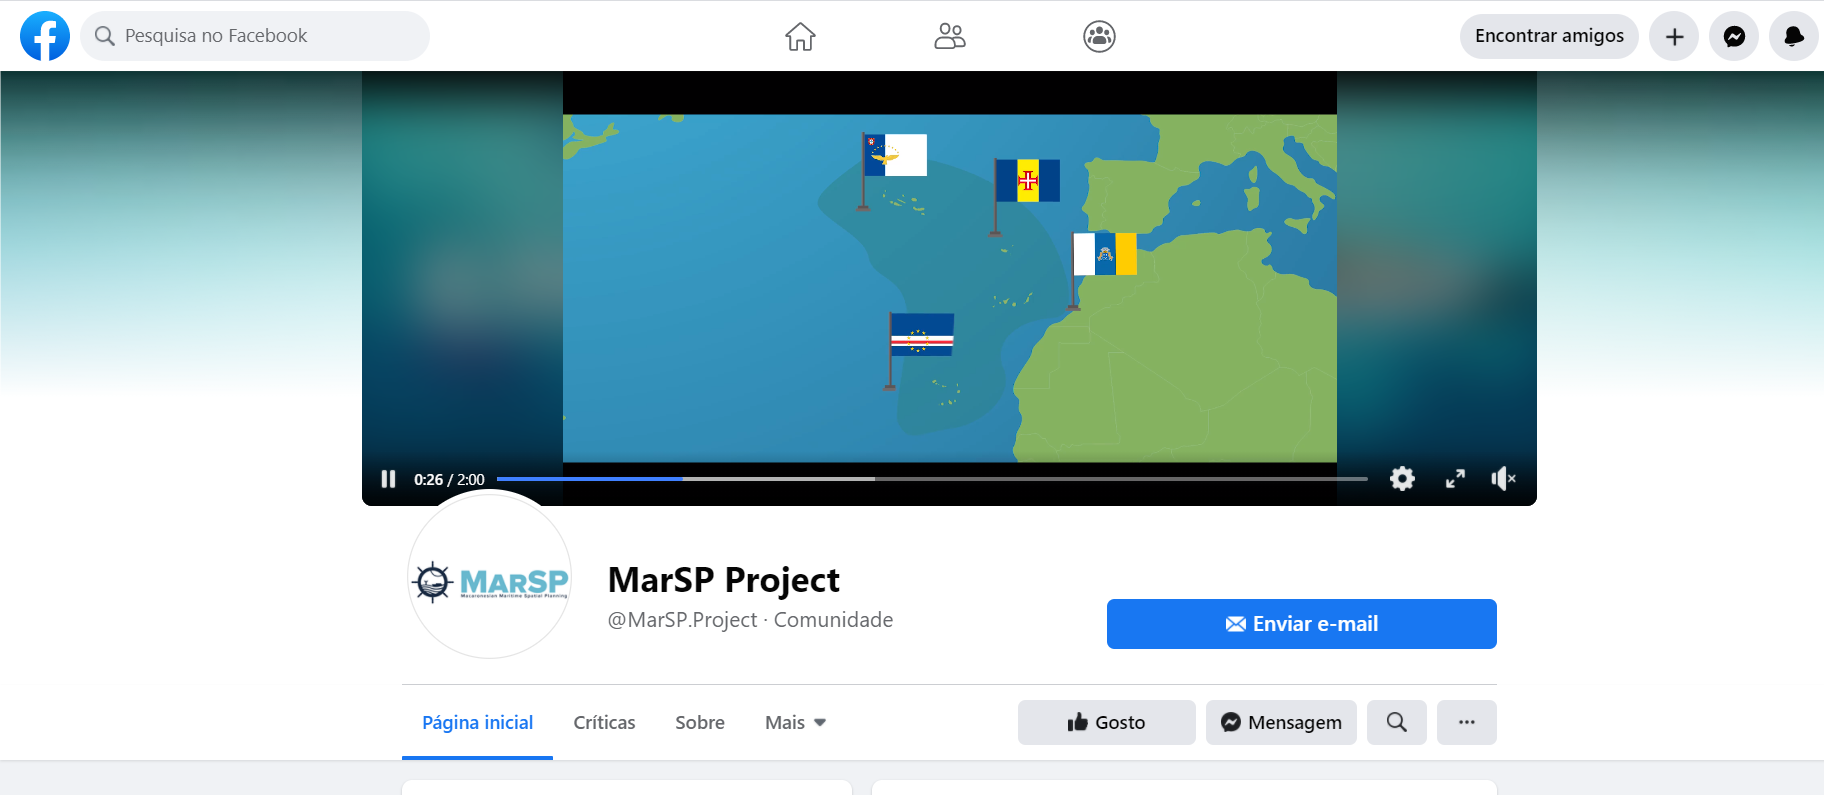 MarSP Project